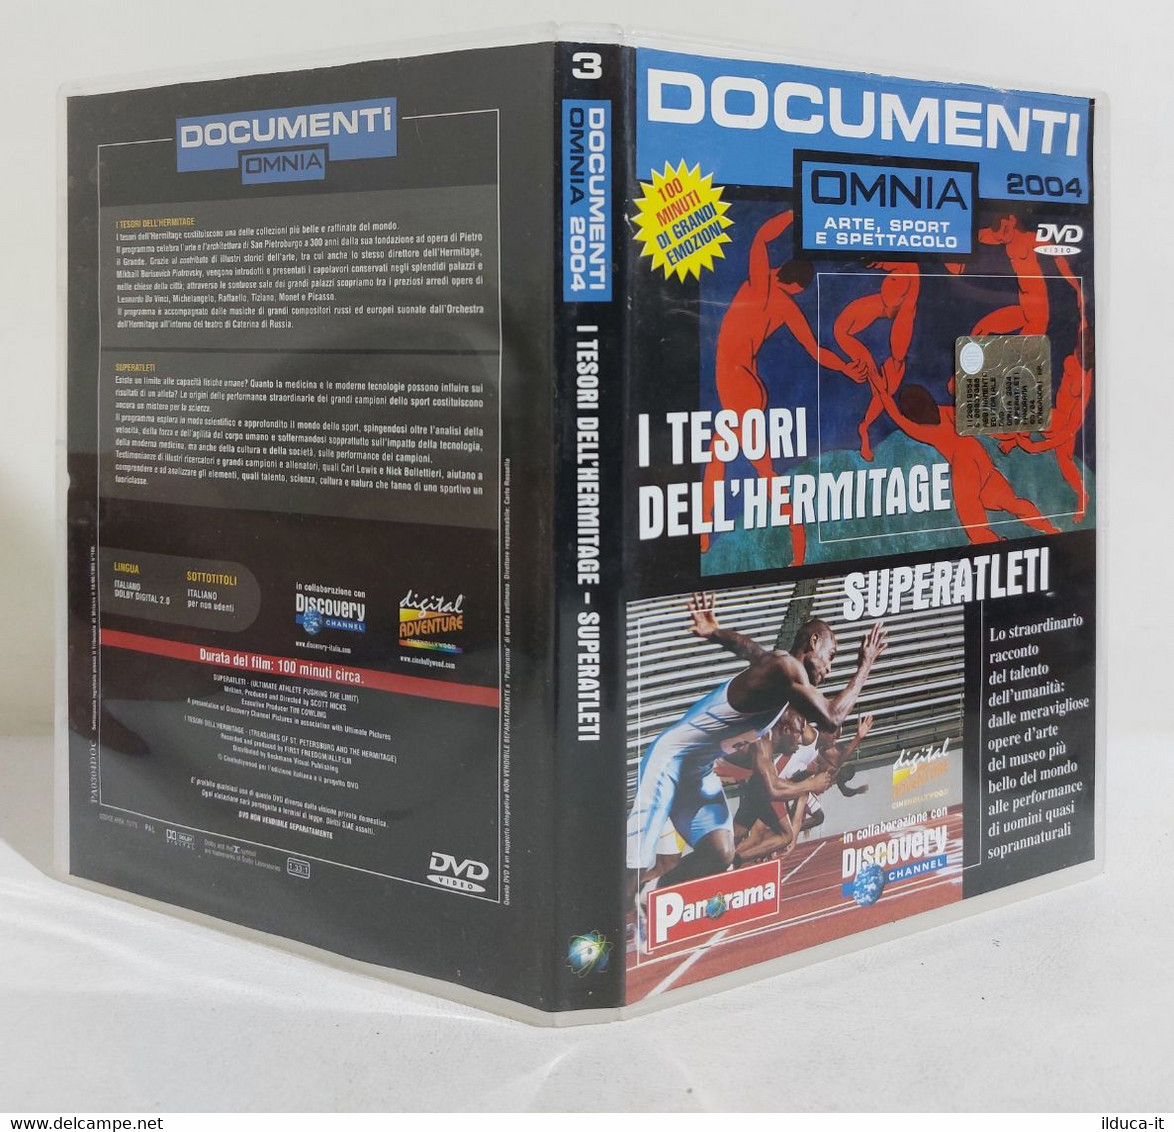 I108856 DVD - Documenti Omnia 2004 N. 3 - I Tesori Dell'hermitage / Superatleti - Documentary